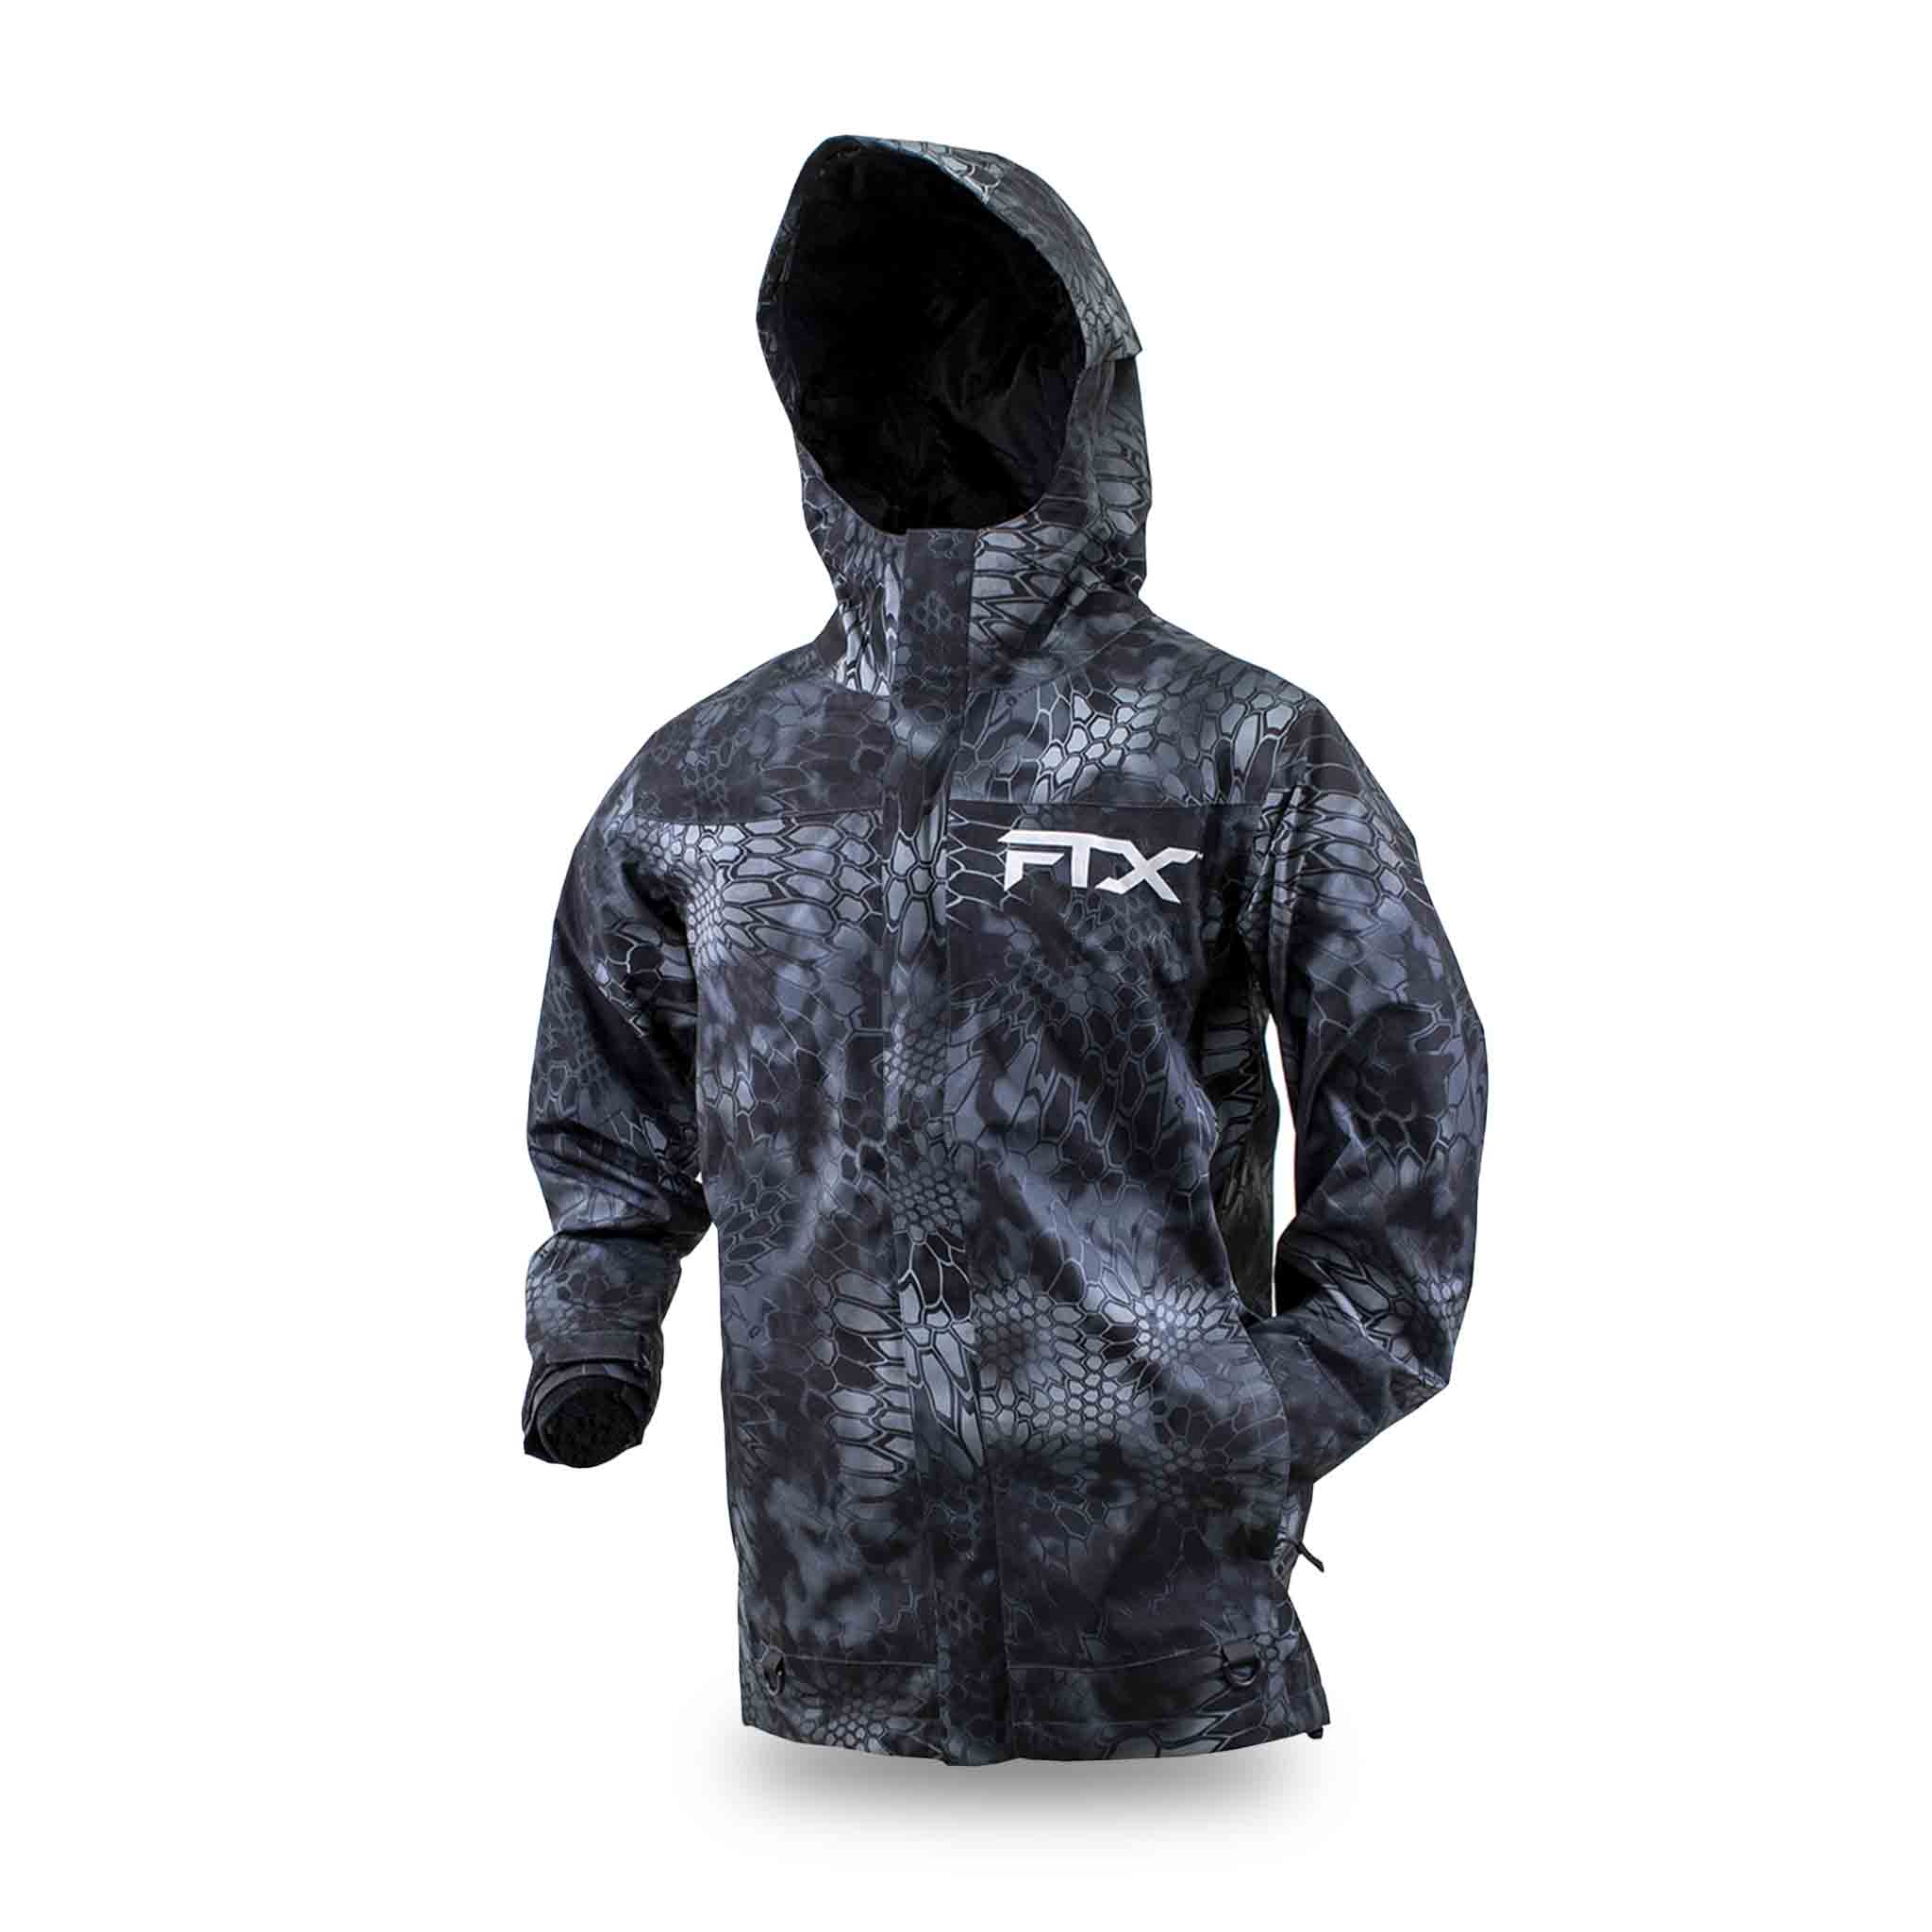 FROGG TOGGS Mens Ftx Armor Premium Waterproof Rain, Fishing/Anglers Jacket